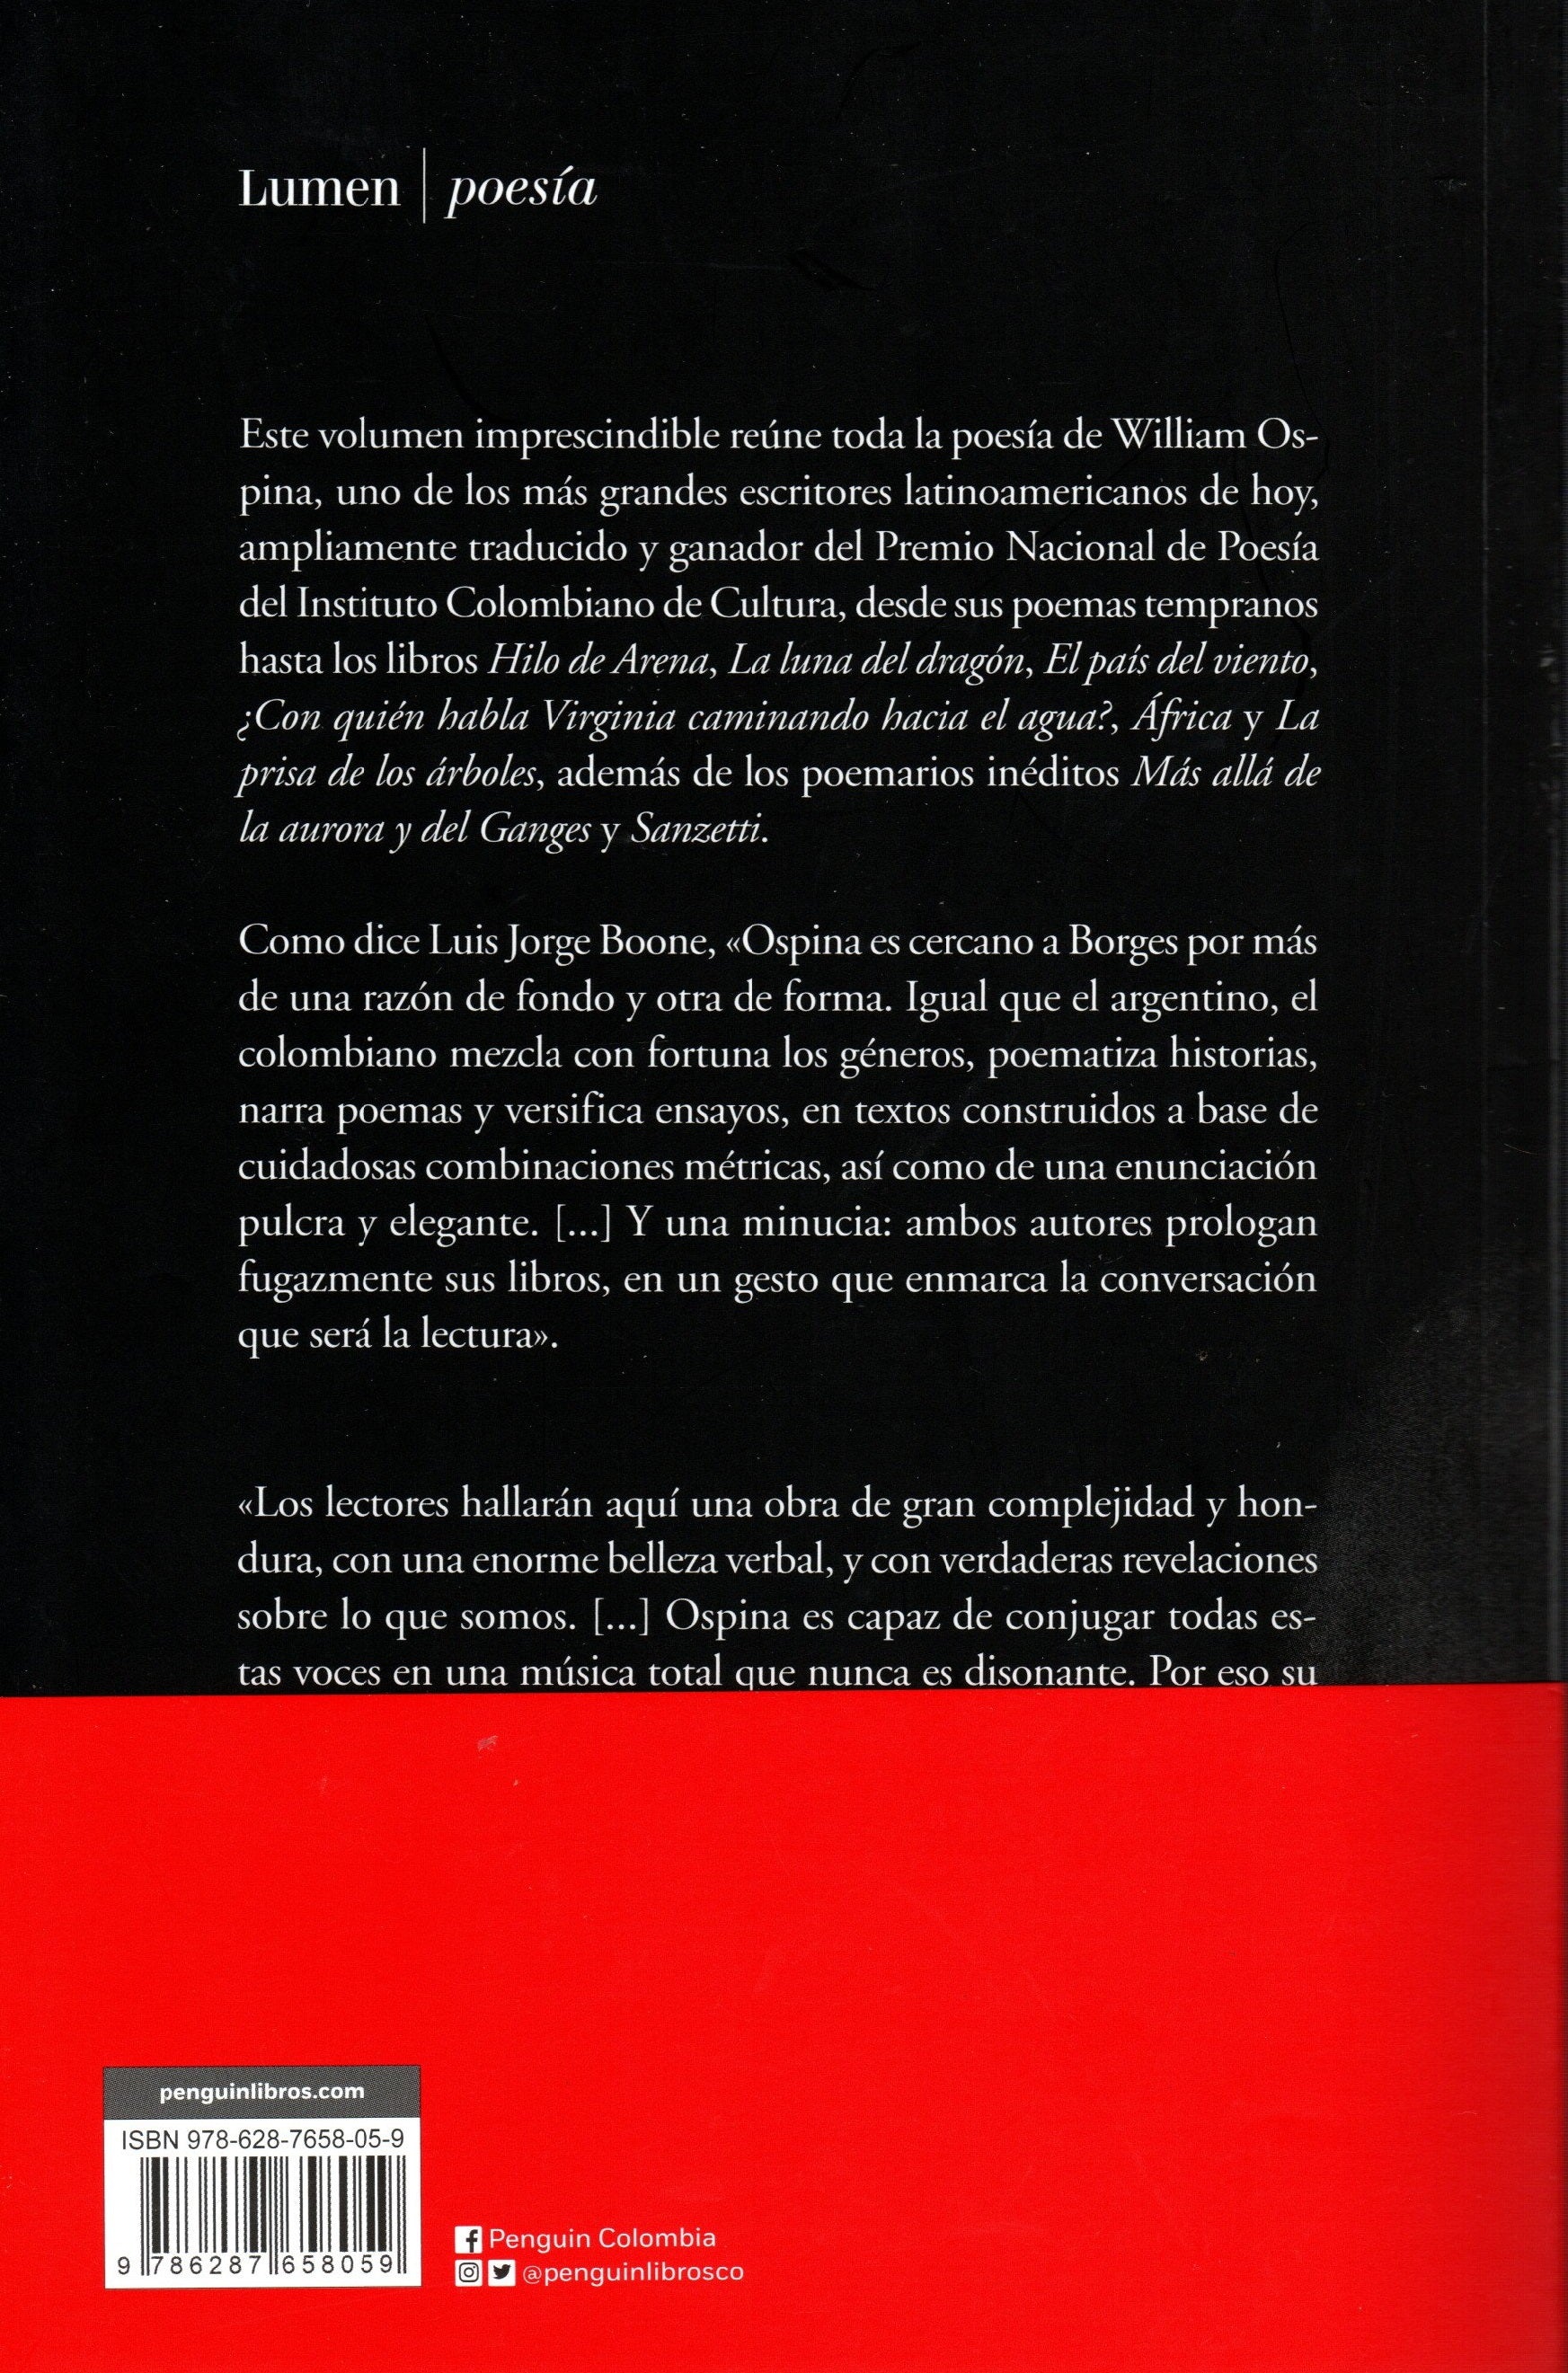 Libro William Ospina - Poesía completa